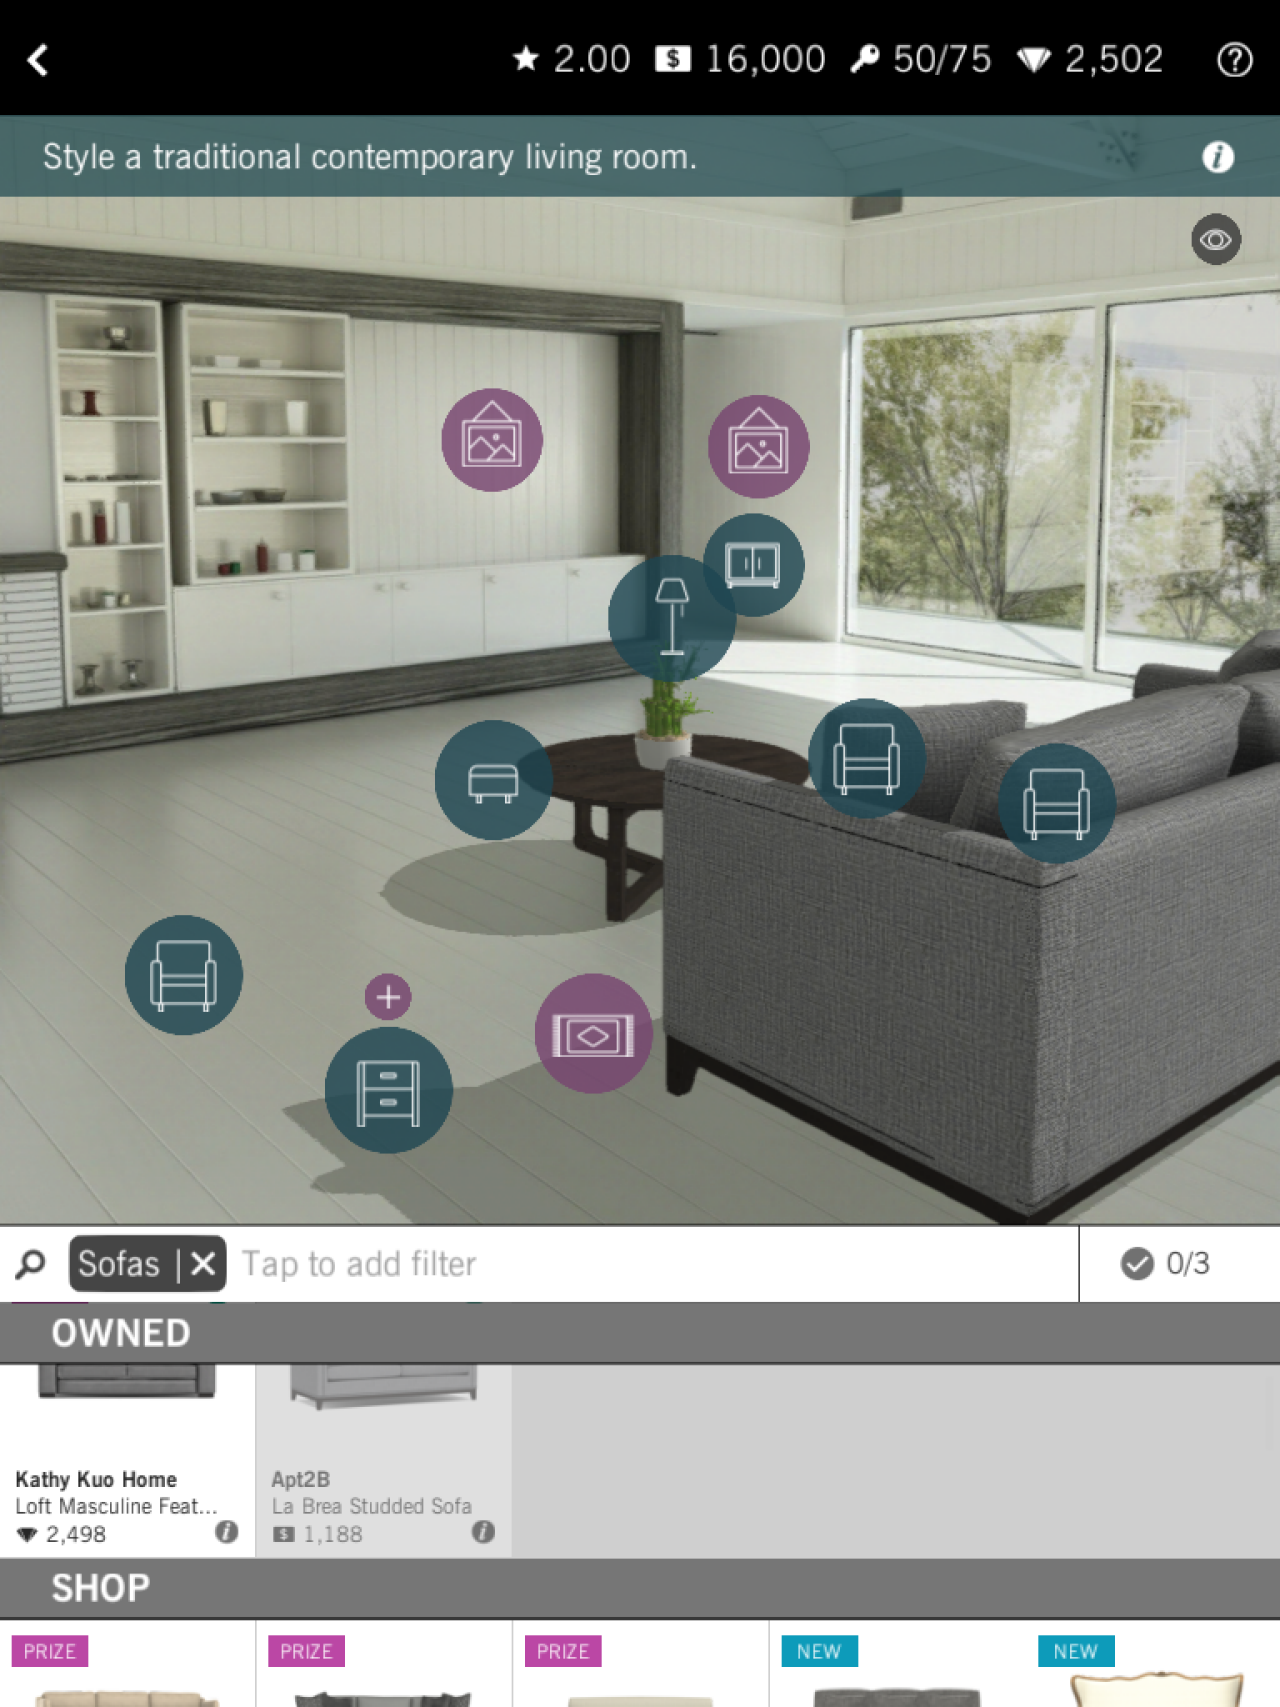 Be an Interior Designer With Design Home App HGTV's Decorating